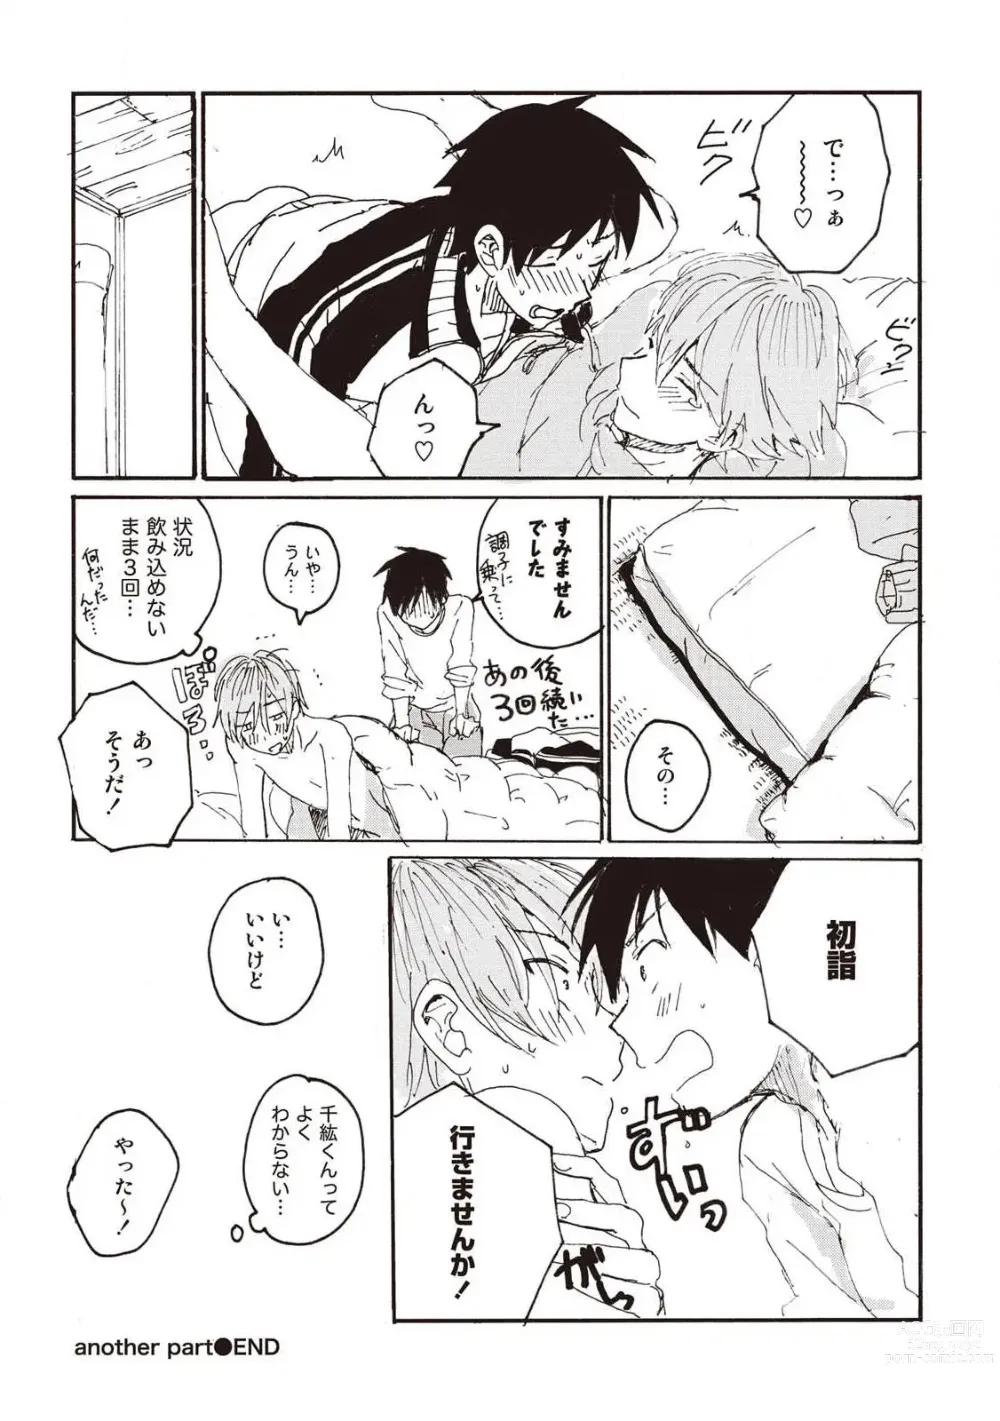 Page 181 of manga Hatomugi Batake de Tsukamaete - The Catcher in the Hato